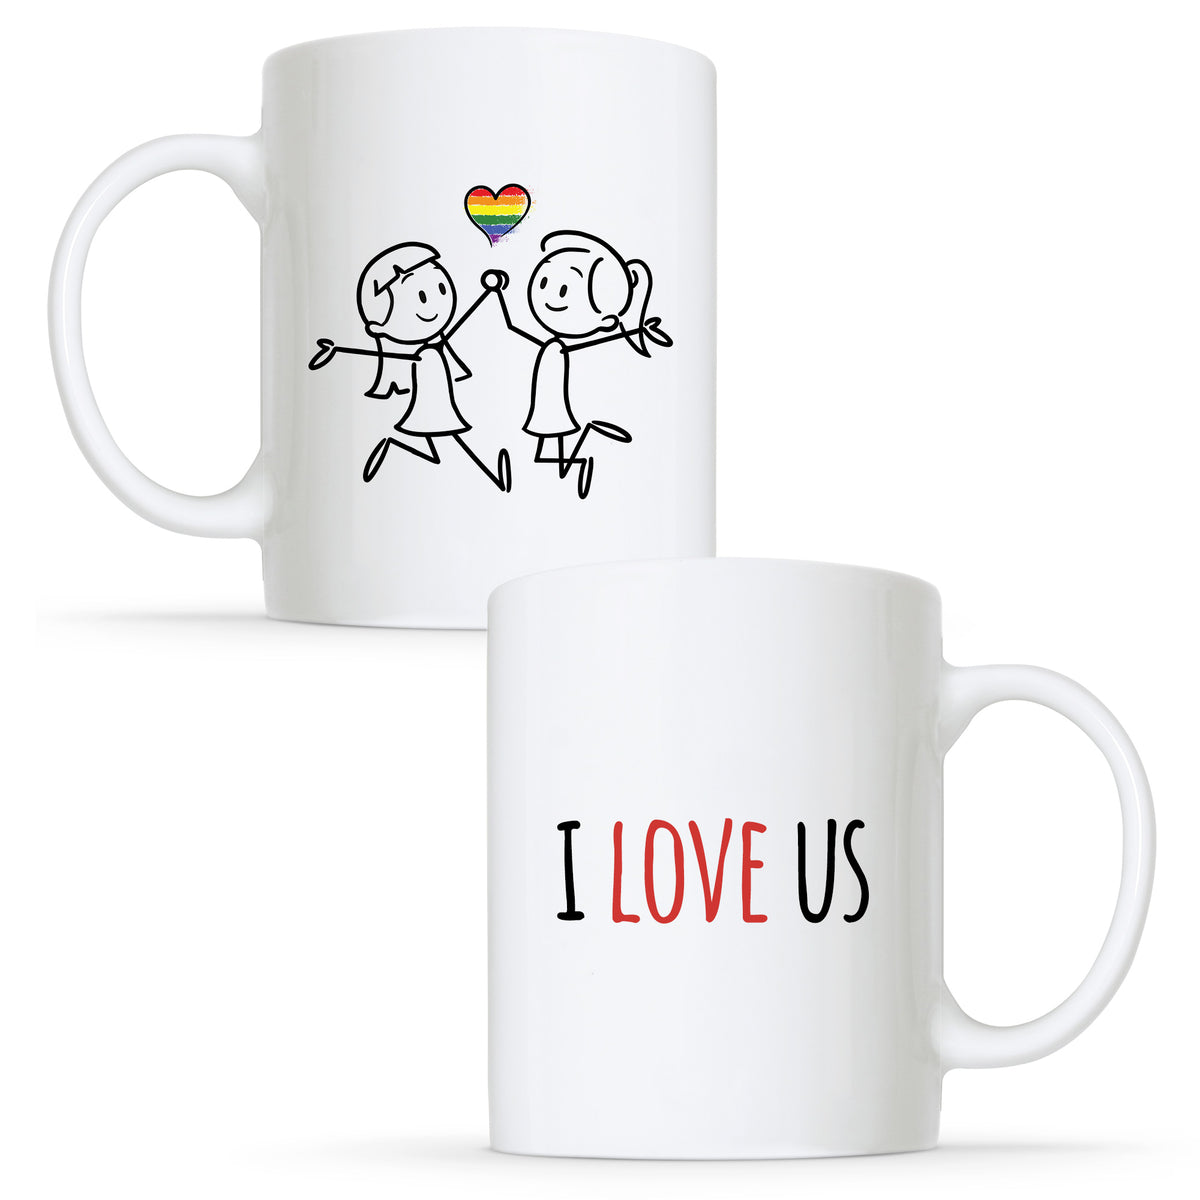 I Love Us - Lesbian Gay Couple Mug Set | Gift